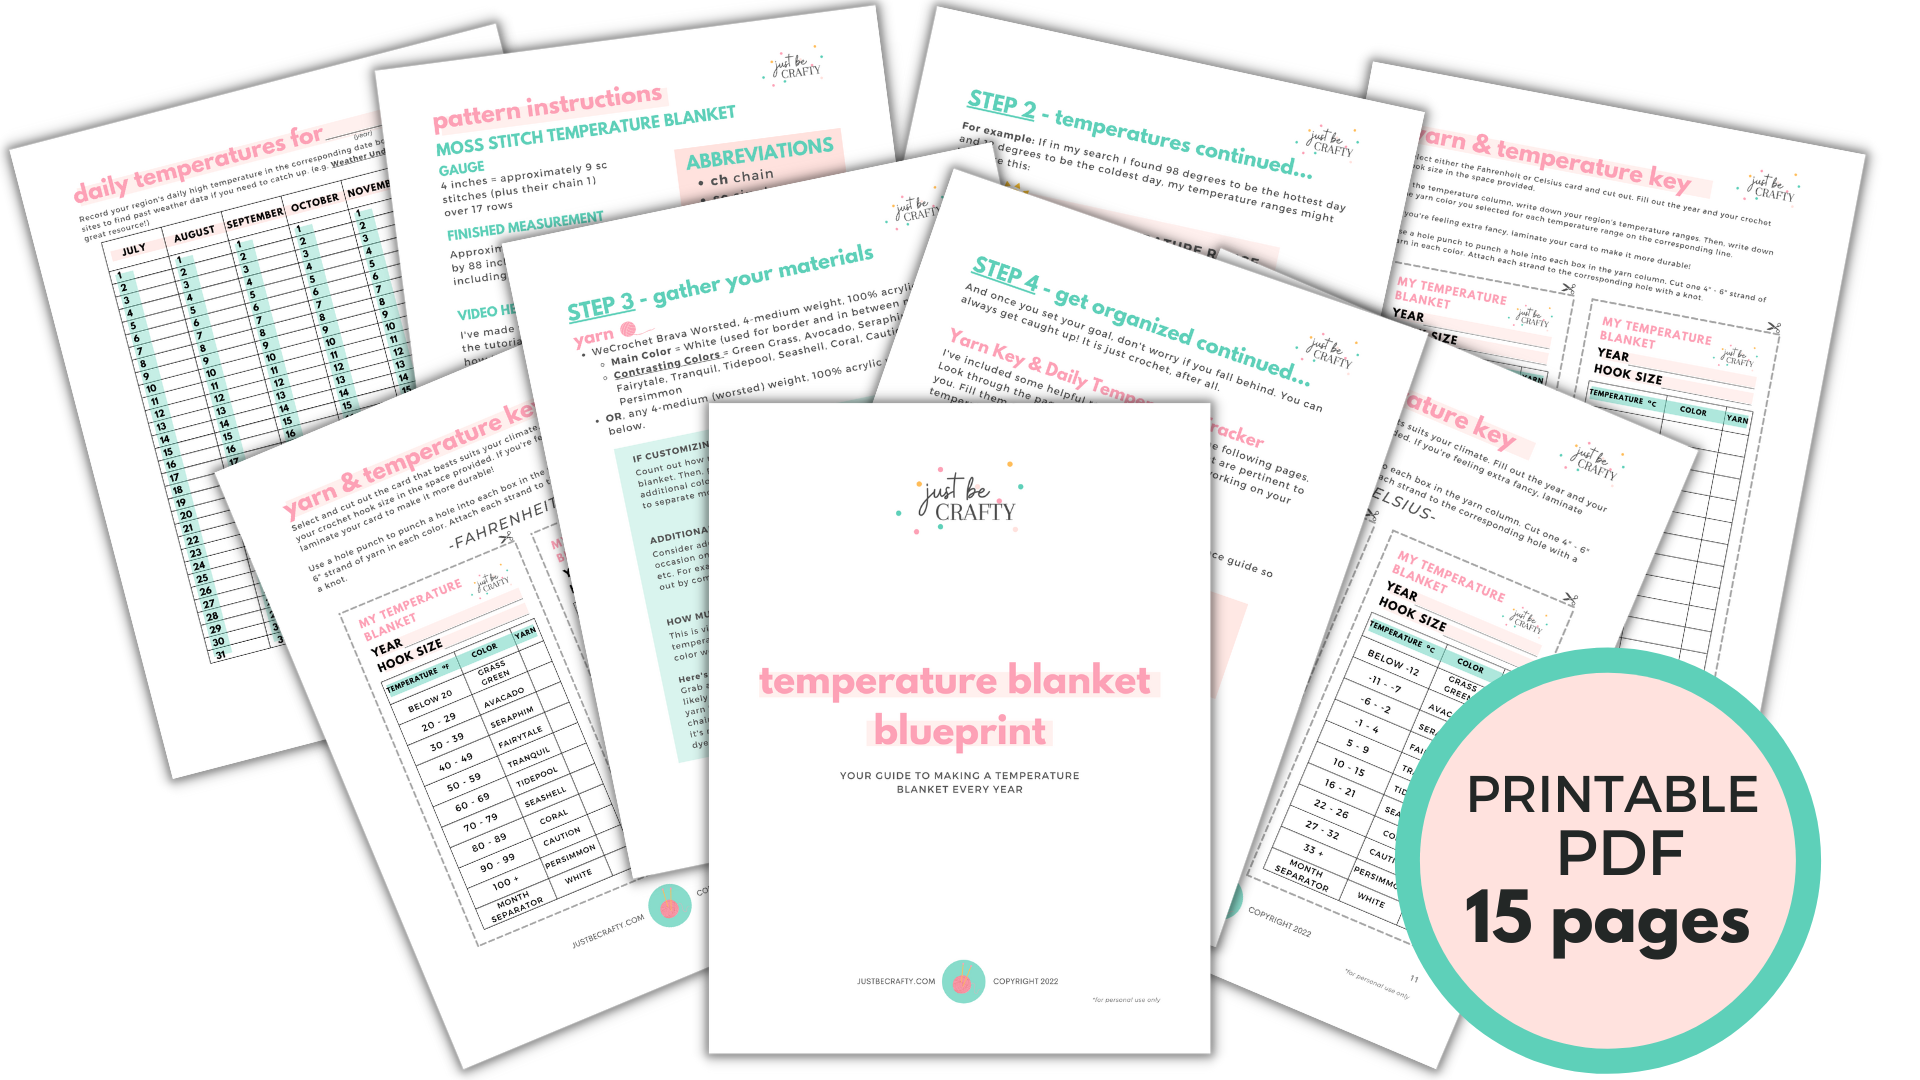 Temperature Blanket Blueprint